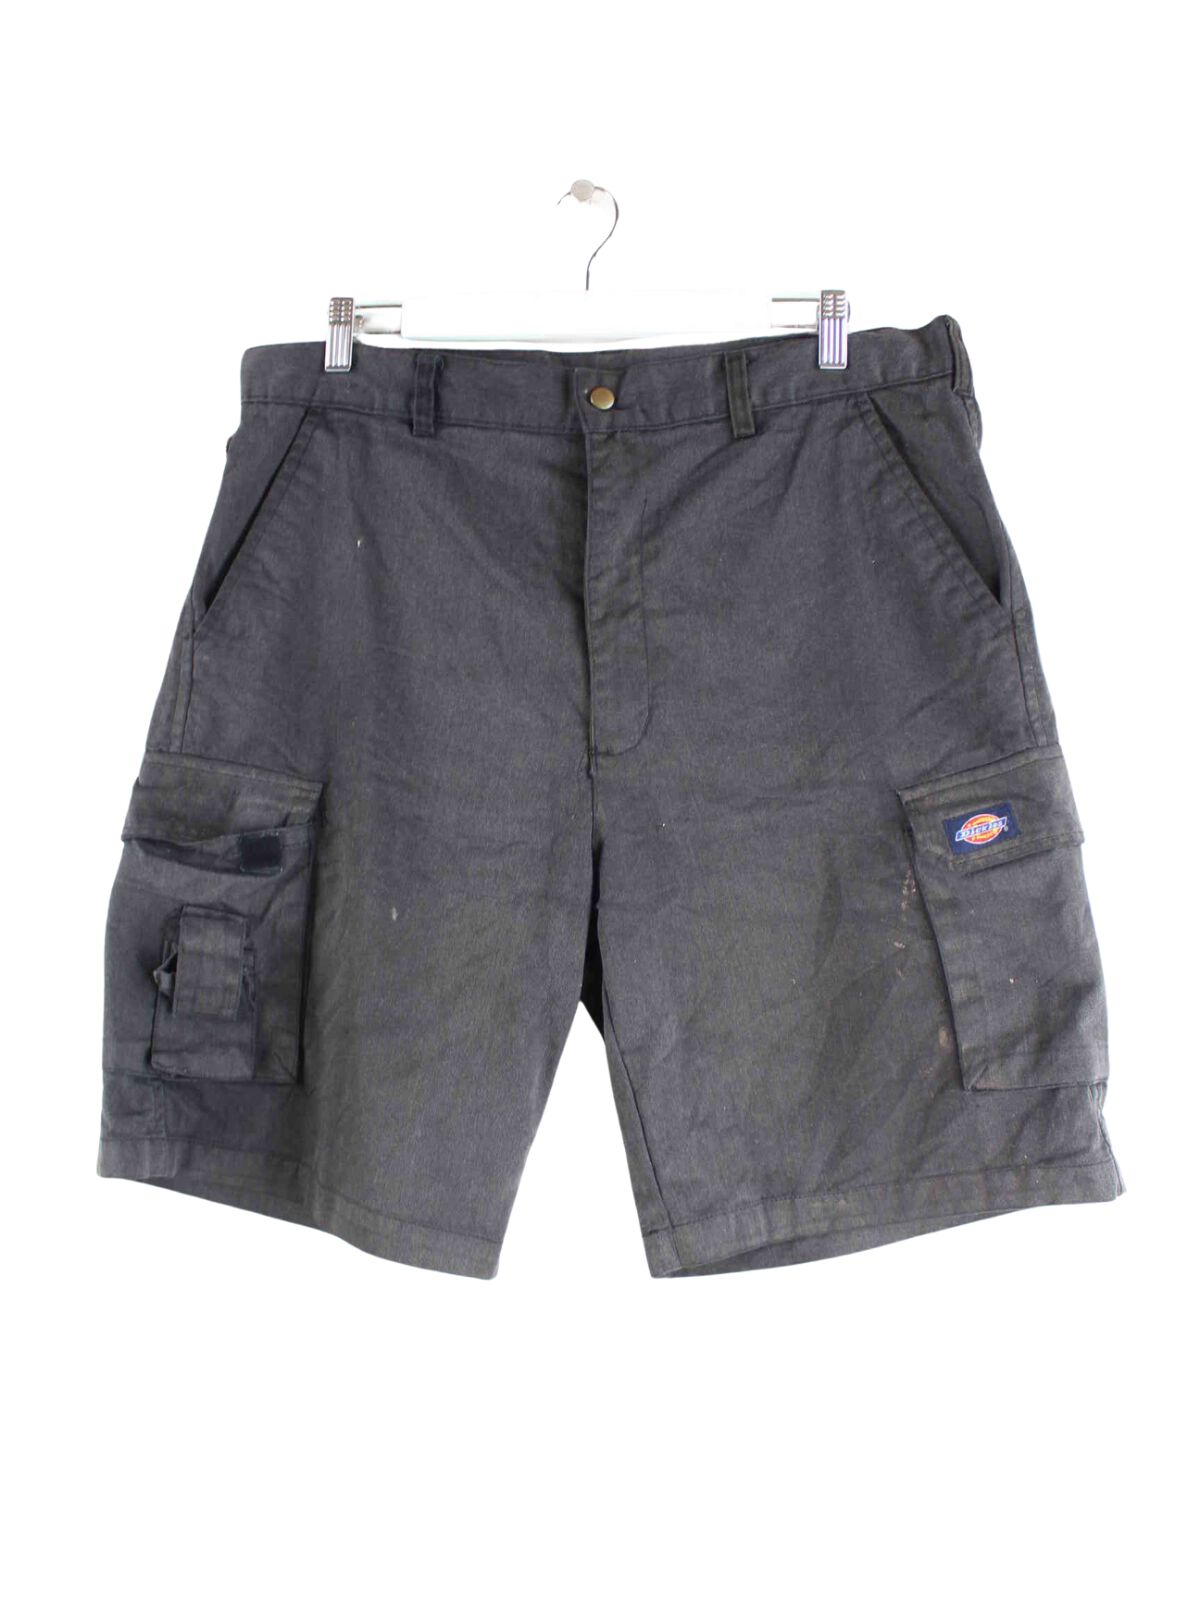 Dickies Workwear Shorts Grau W36 (front image)